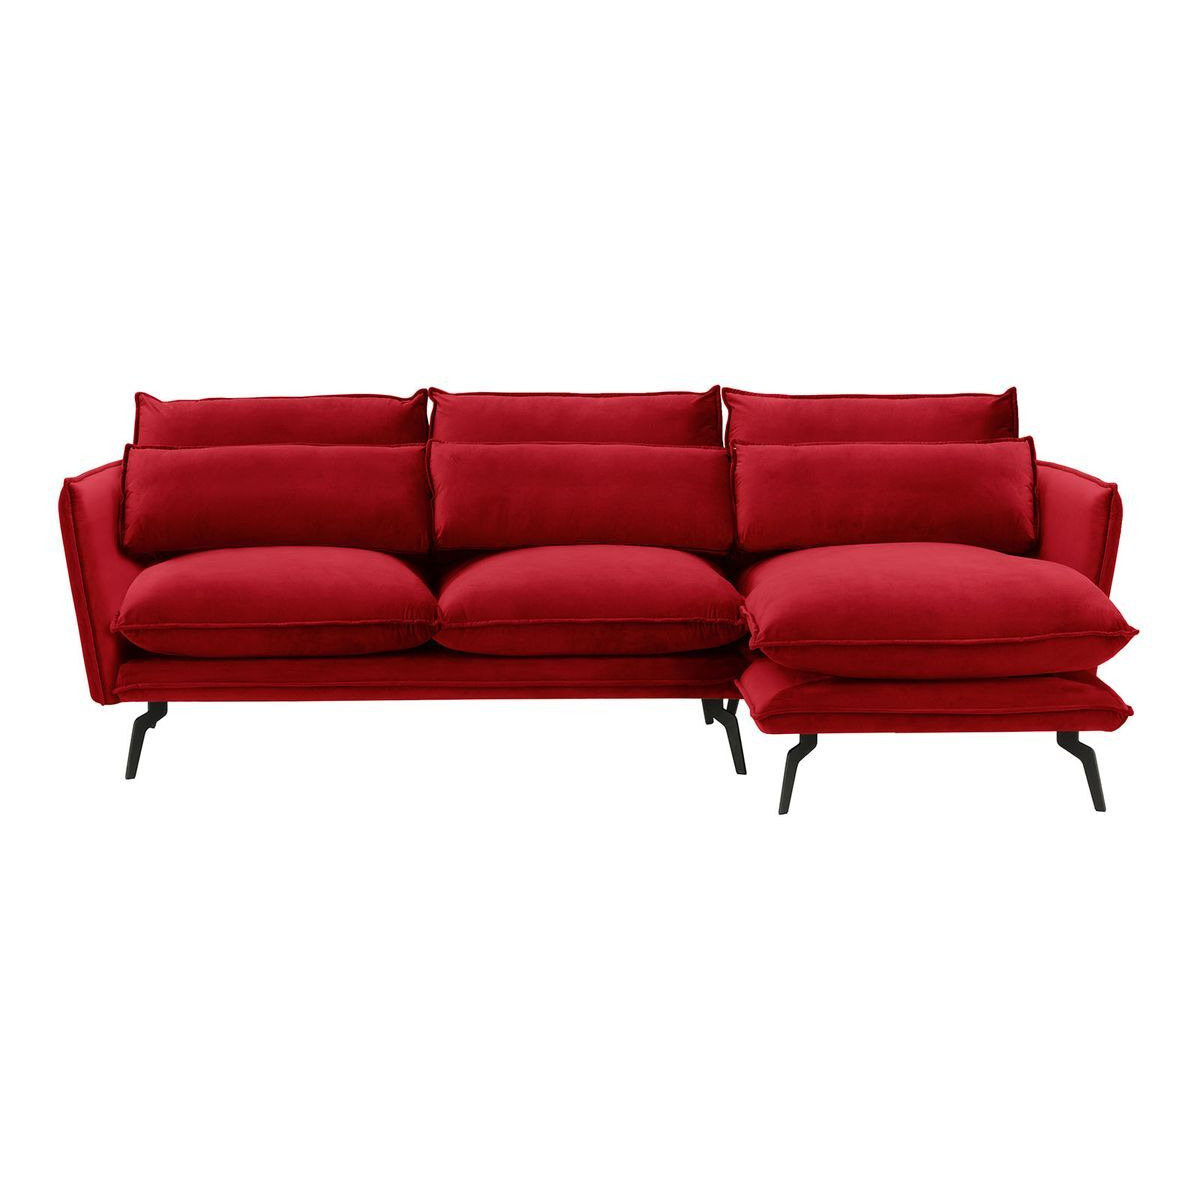 Layla Right Hand Corner Sofa, dark red - image 1